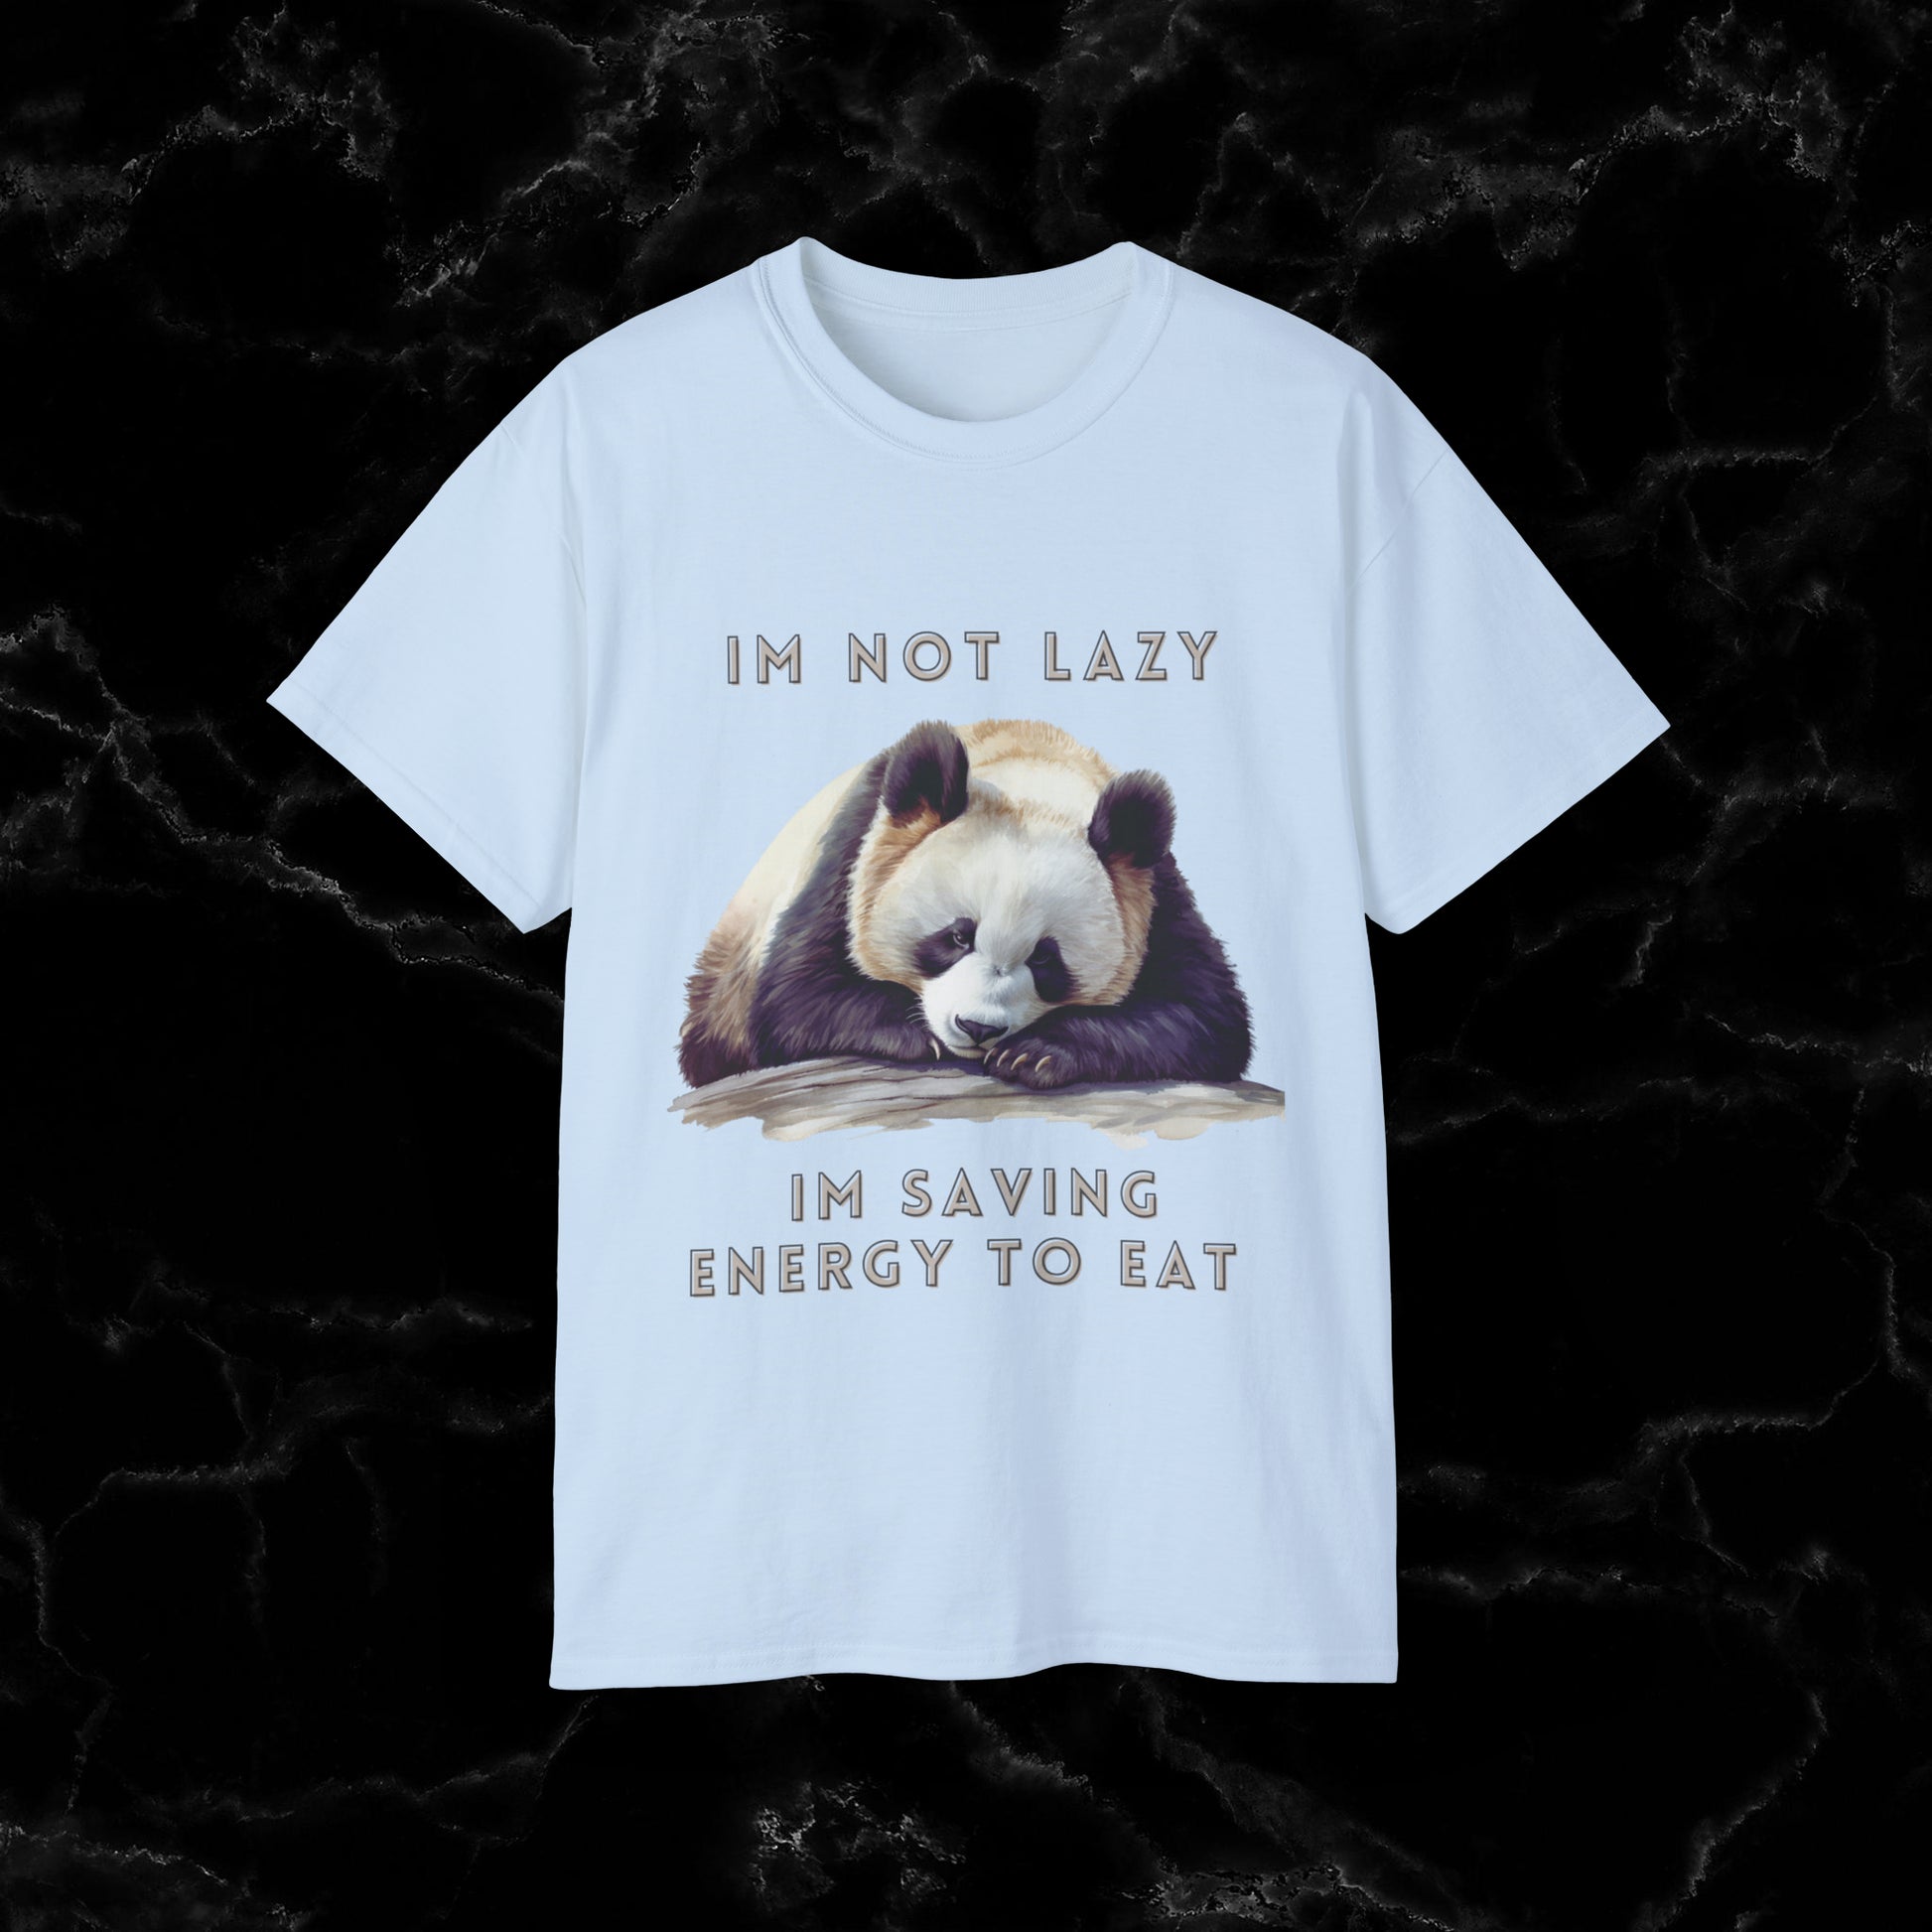 Nap Time Panda Unisex Funny Tee - Hilarious Panda Nap Design - I'm Not Lazy, I'm Saving Energy to Eat T-Shirt Light Blue S 